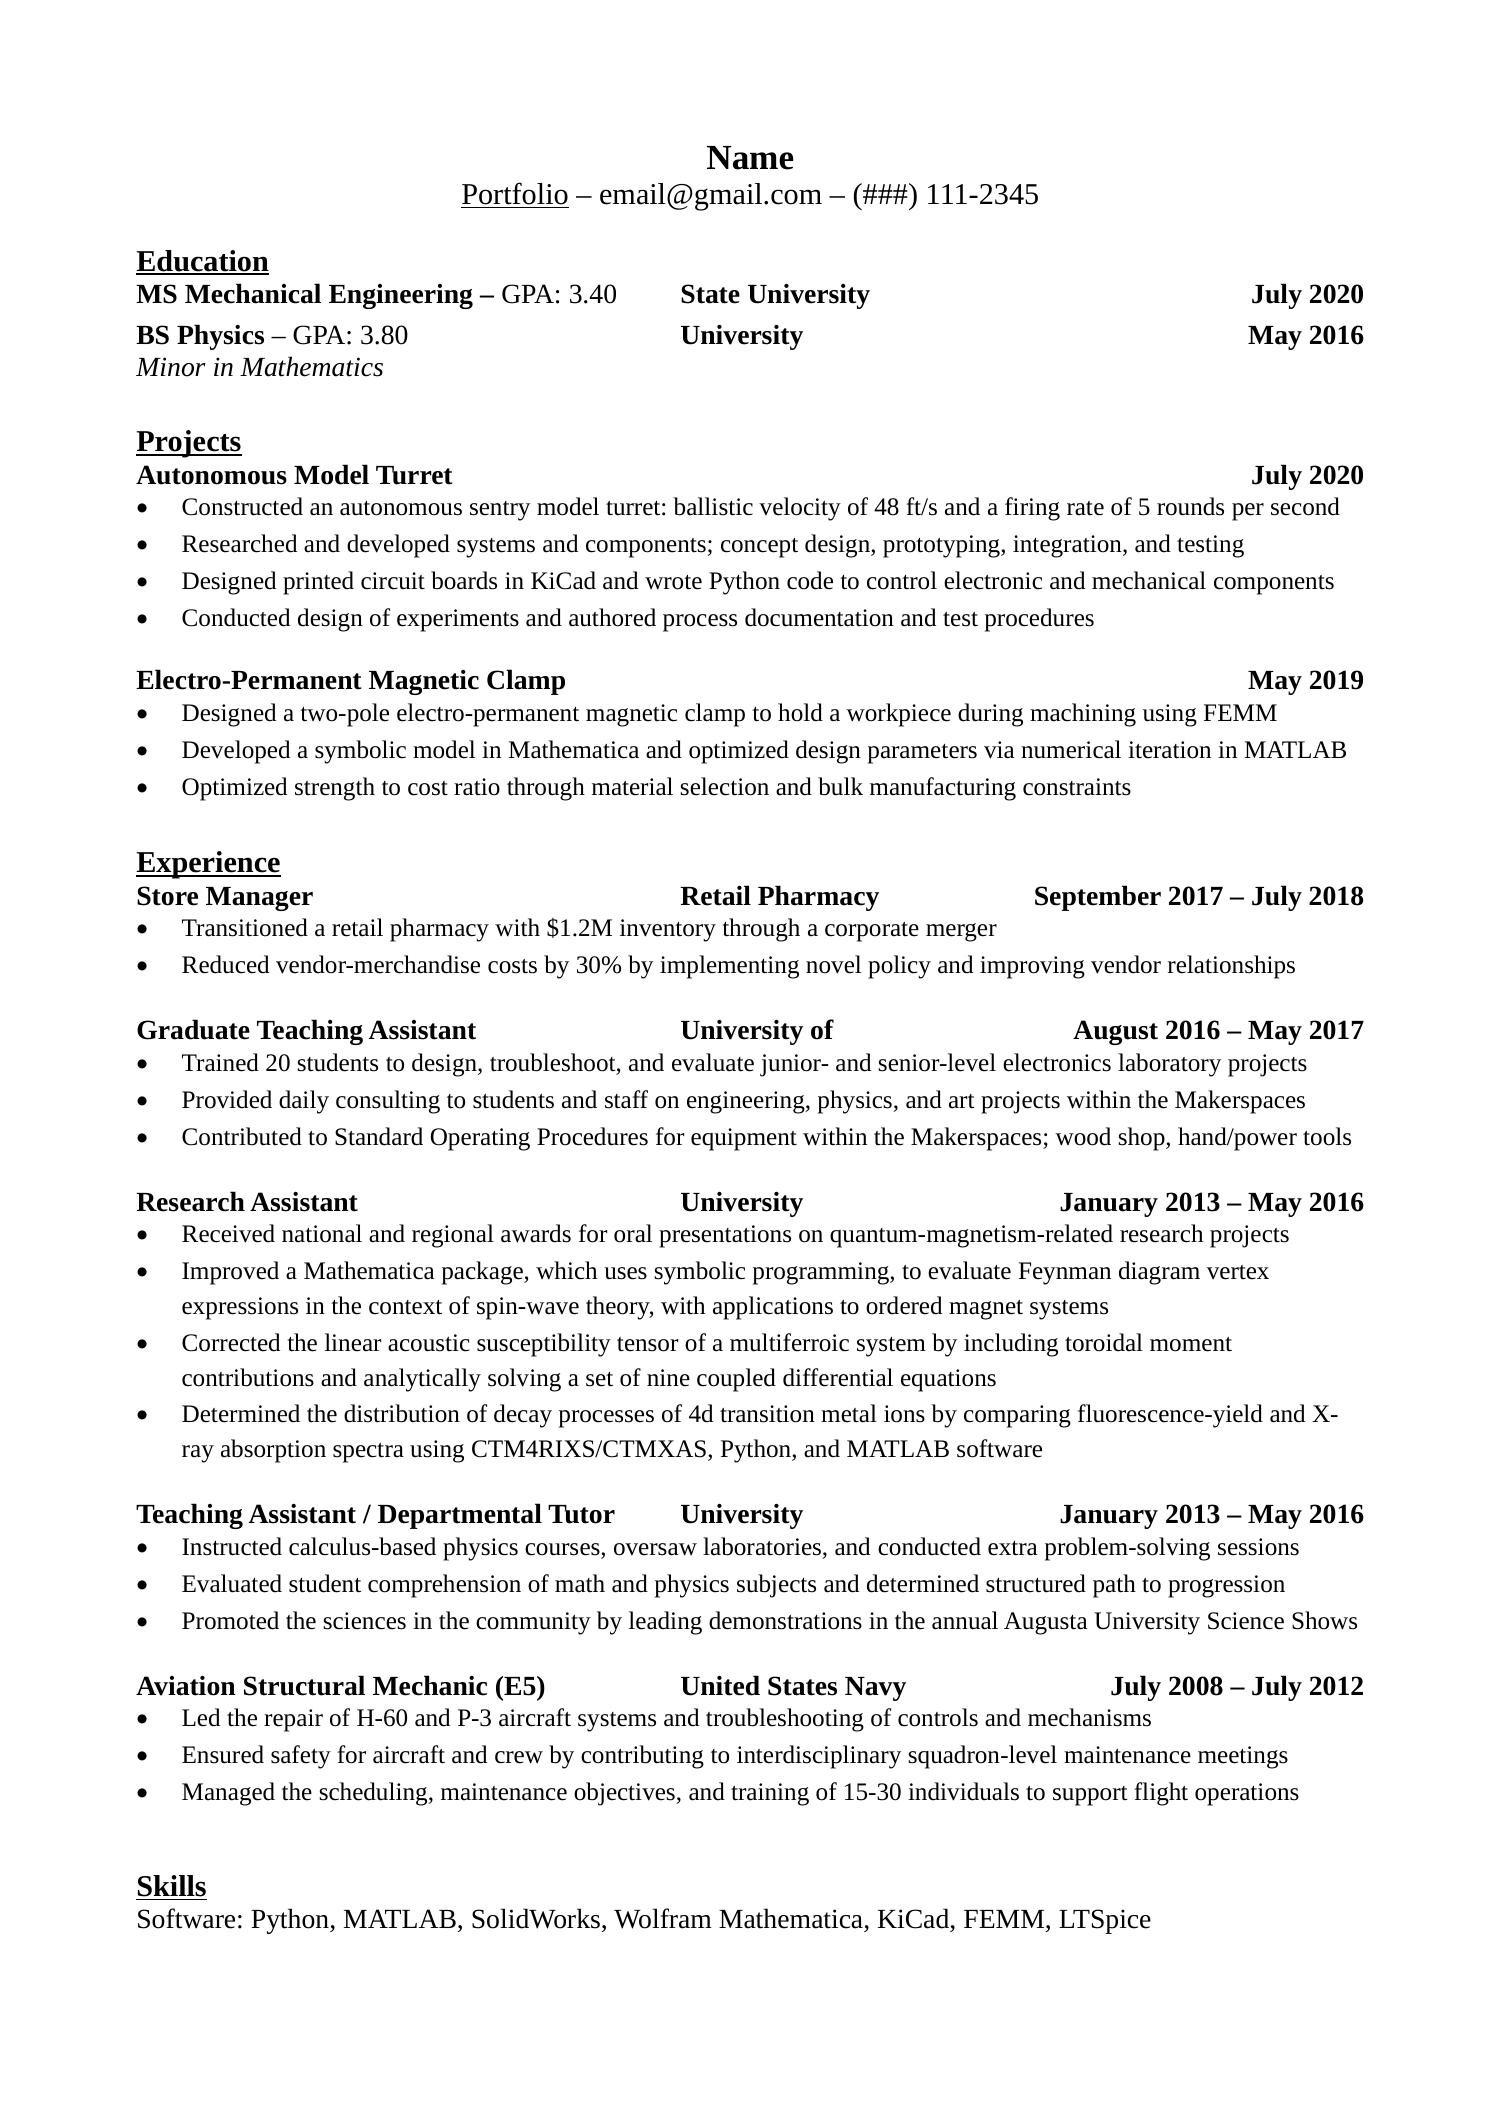 resume template reddit free